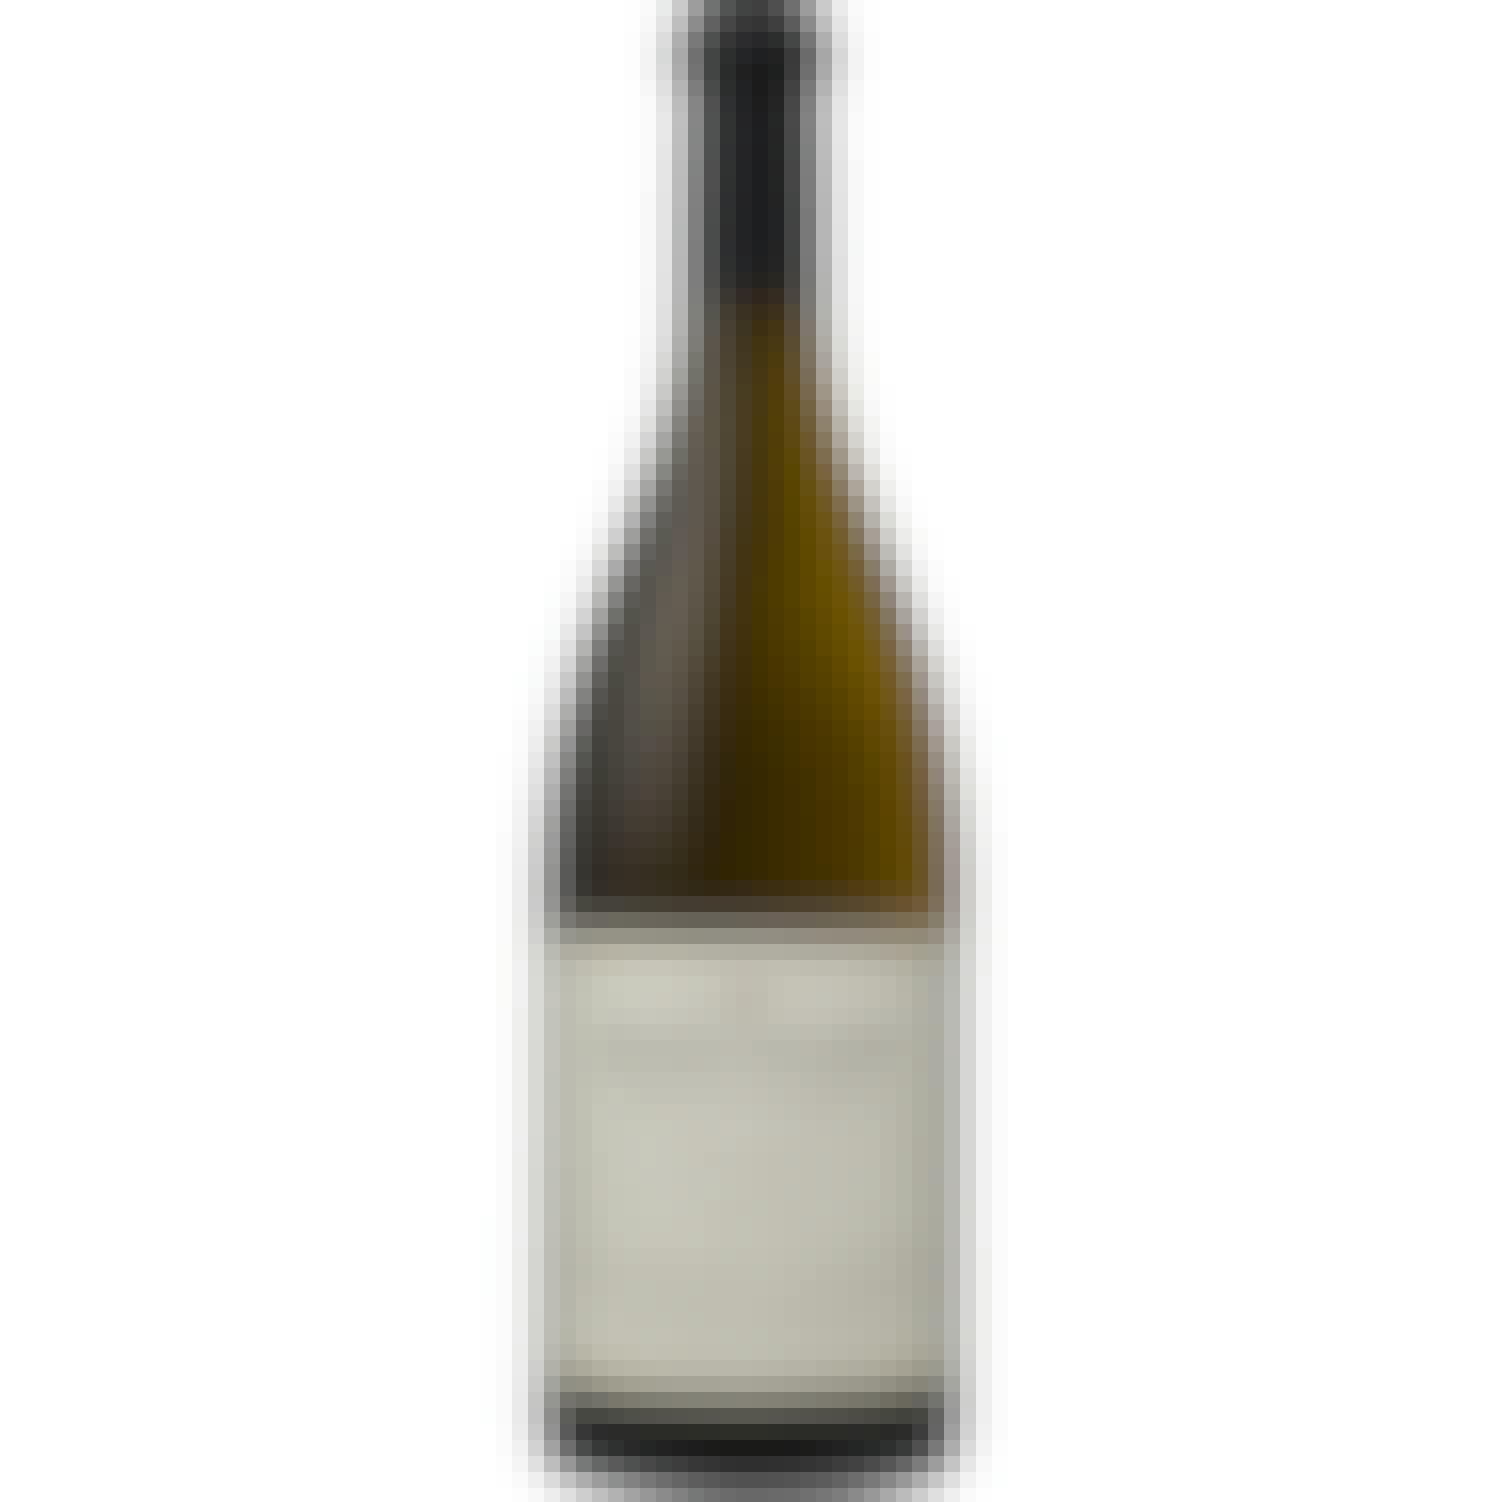 Beringer Private Reserve Chardonnay 750ml